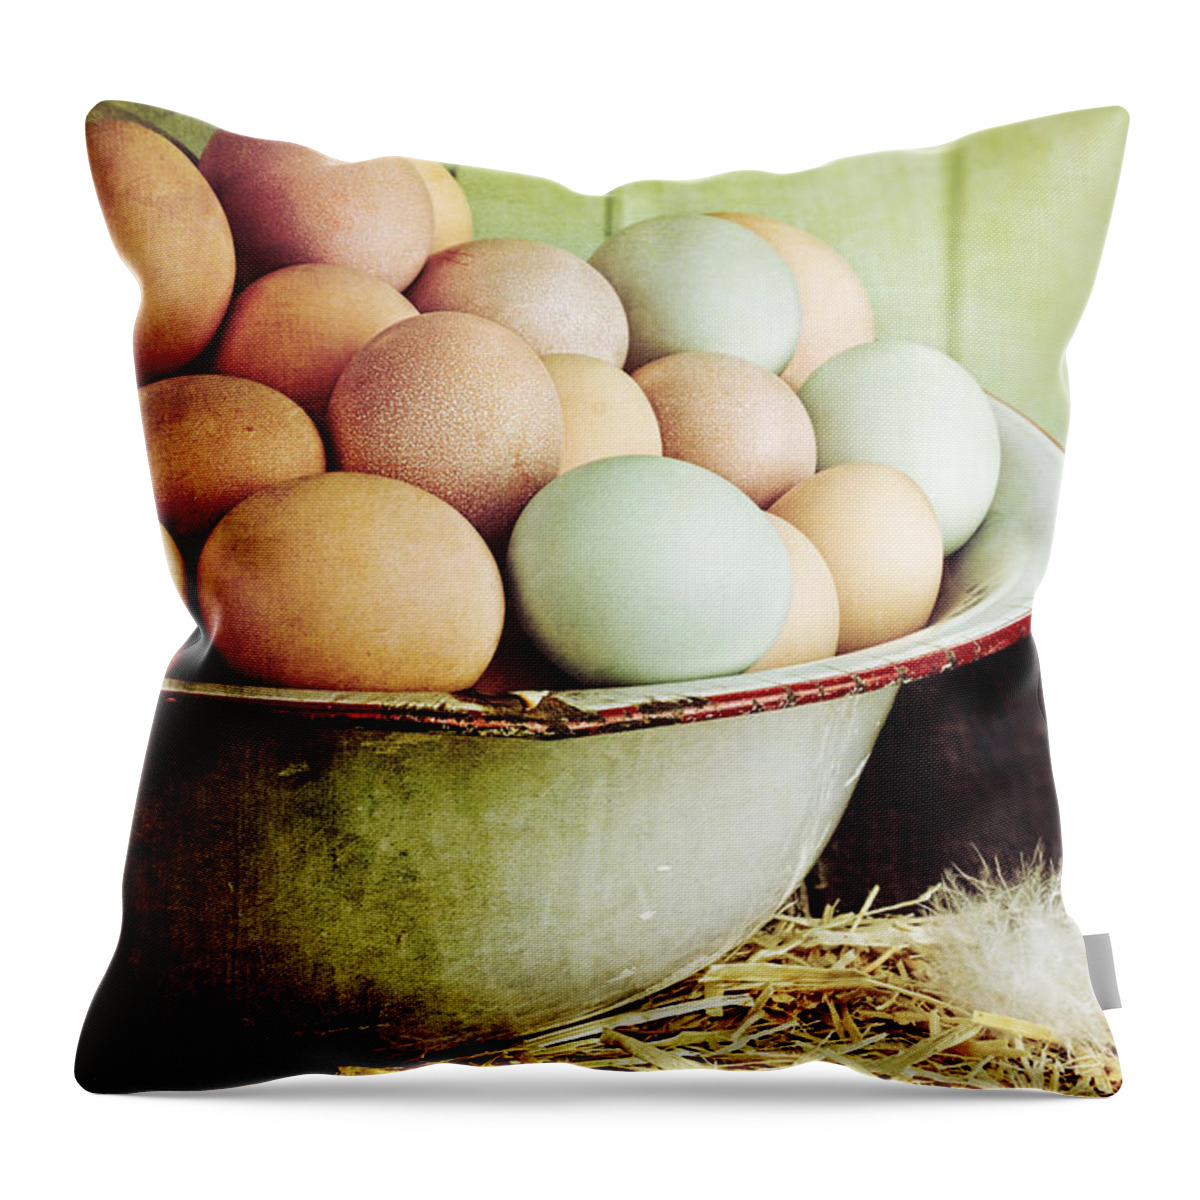 Egg Throw Pillow featuring the photograph Rustic Farm Raised Eggs by Stephanie Frey